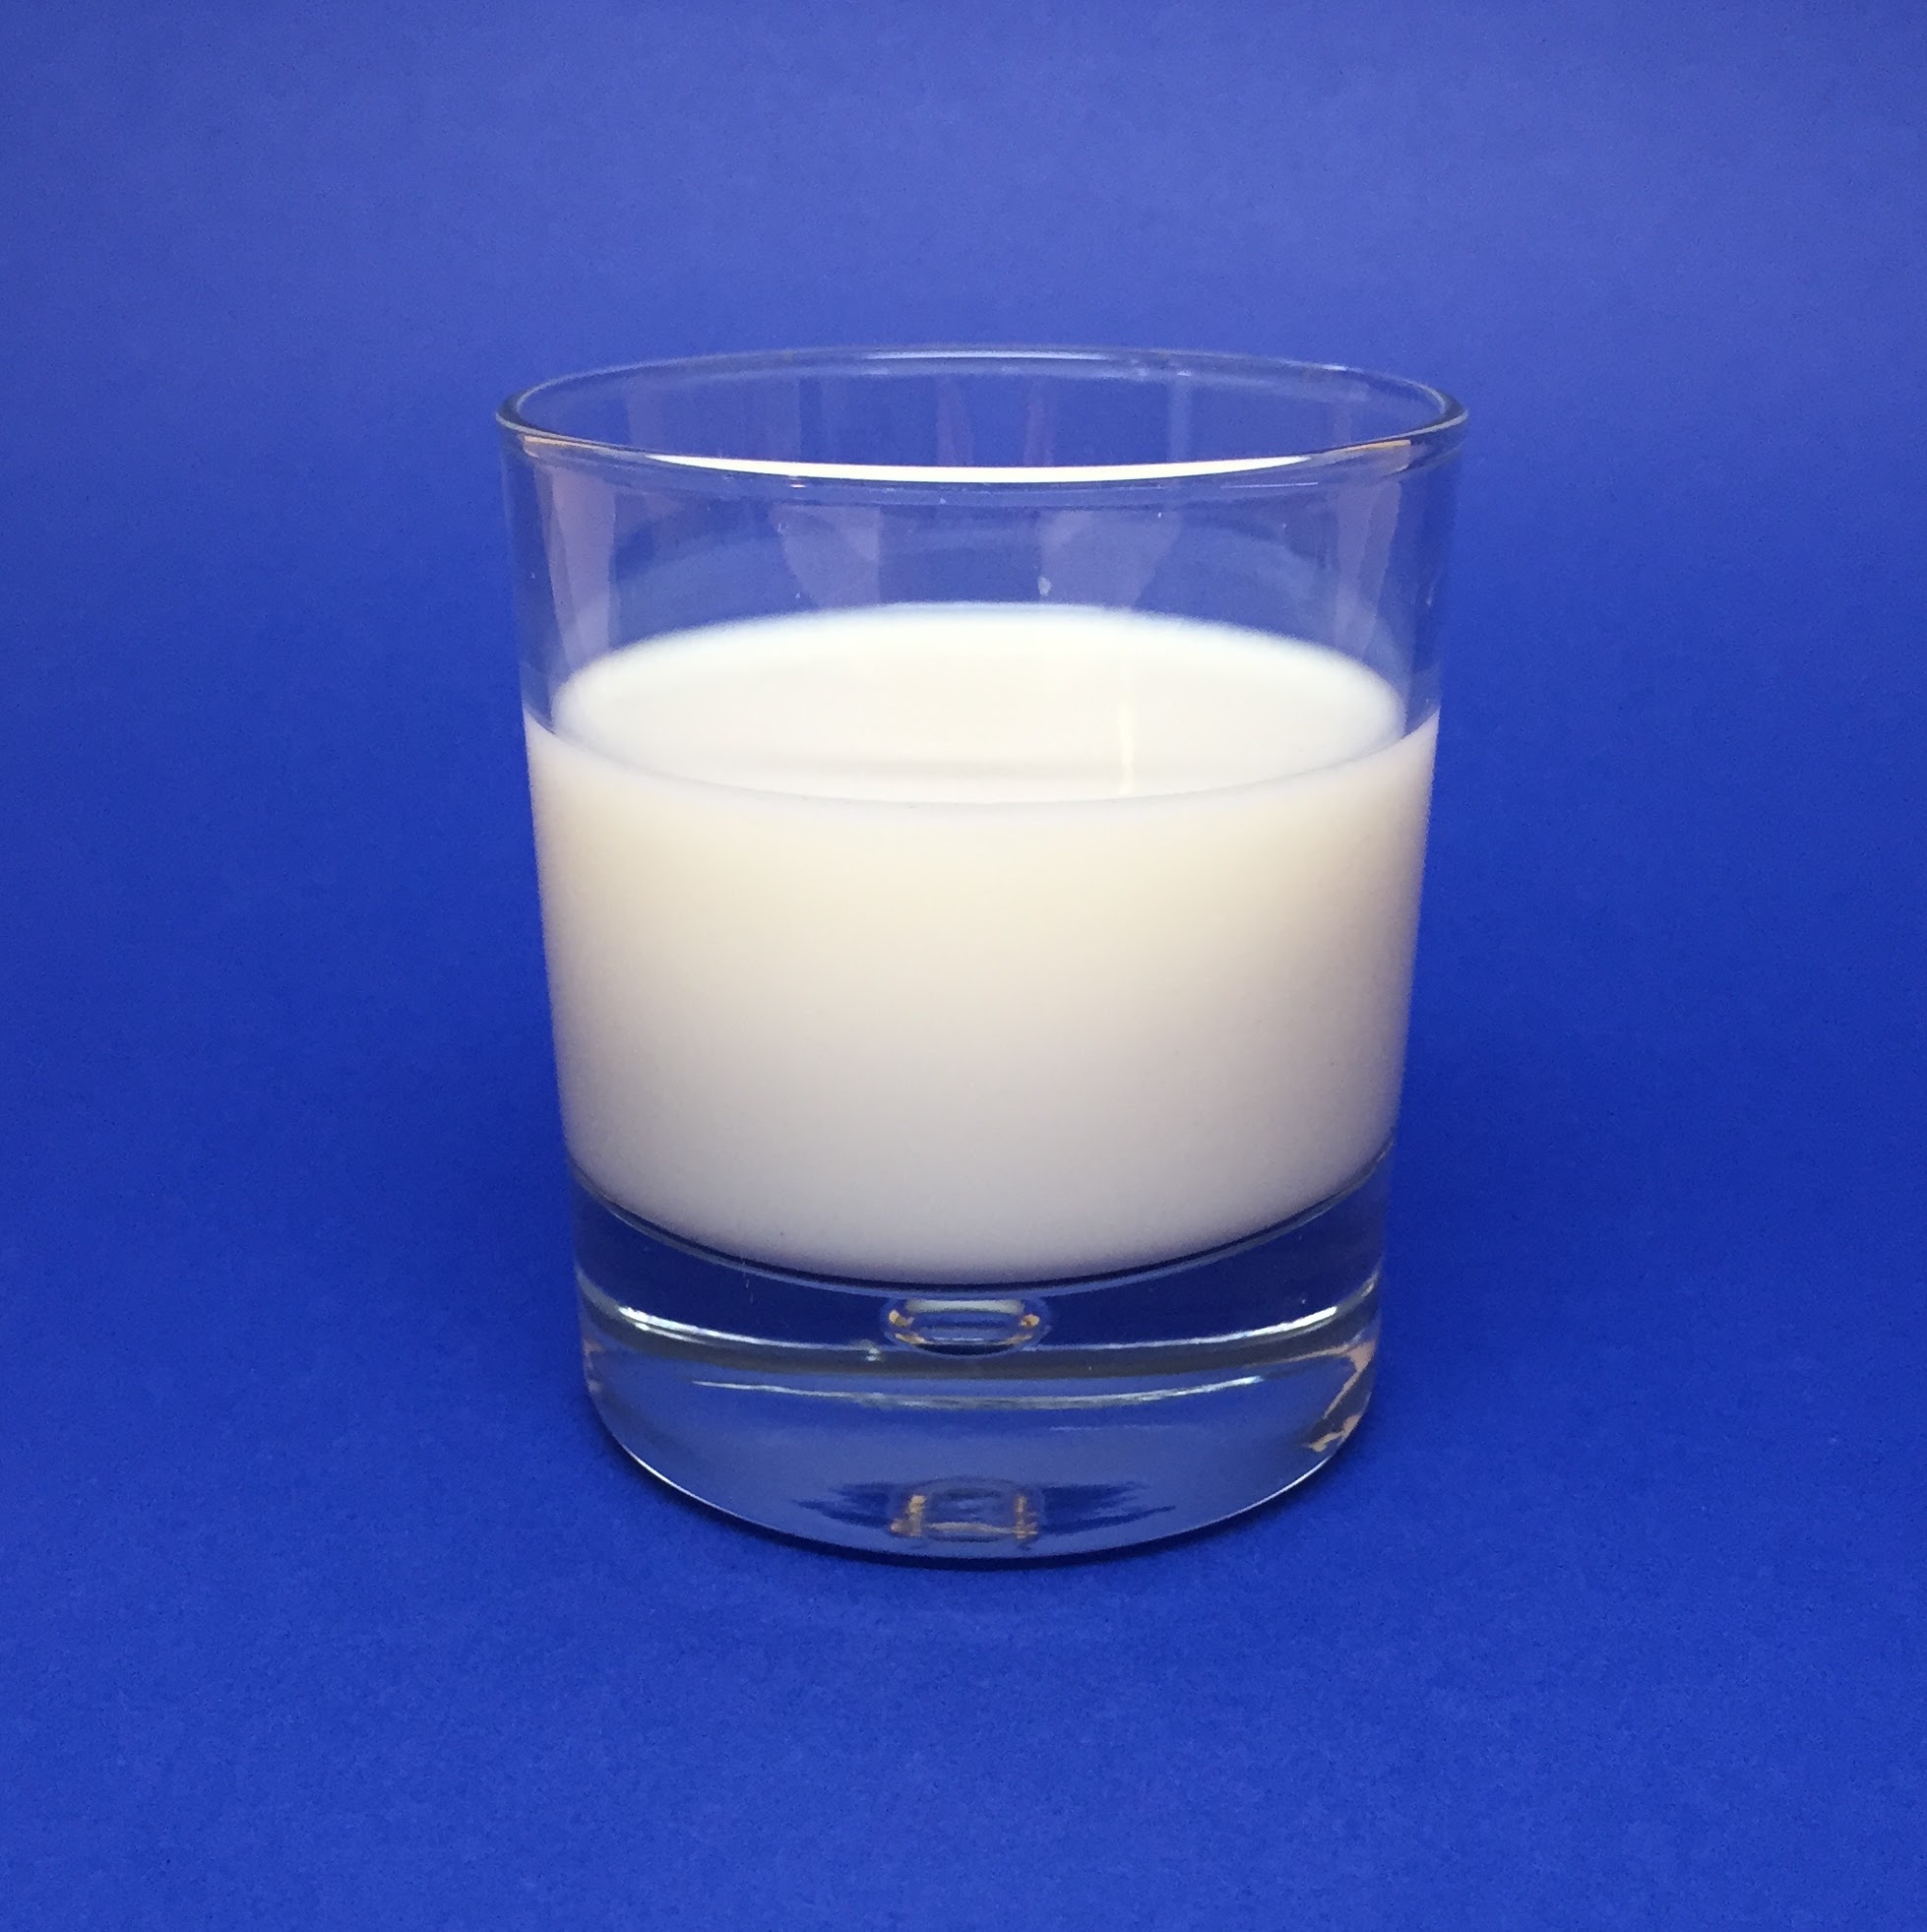 https://upload.wikimedia.org/wikipedia/commons/a/a5/Glass_of_Milk_%2833657535532%29.jpg